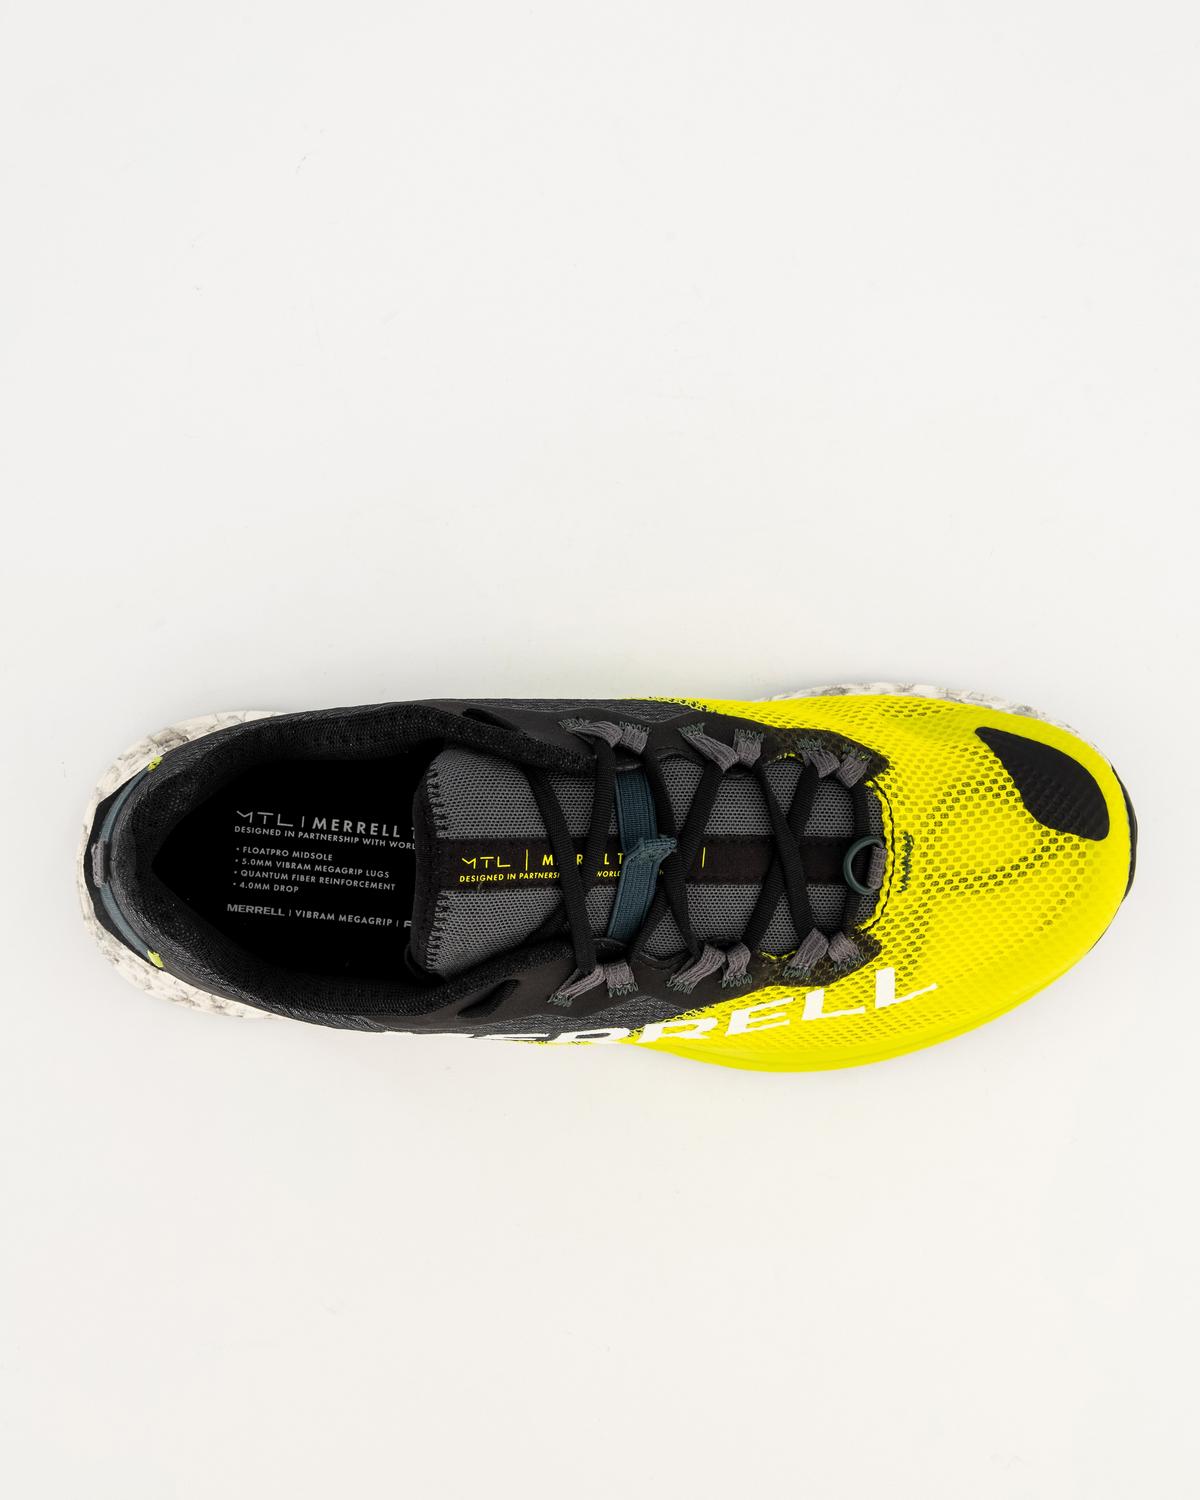 Merrell Men's MTL Long Sky 2 Trail Running Shoes -  Yellow